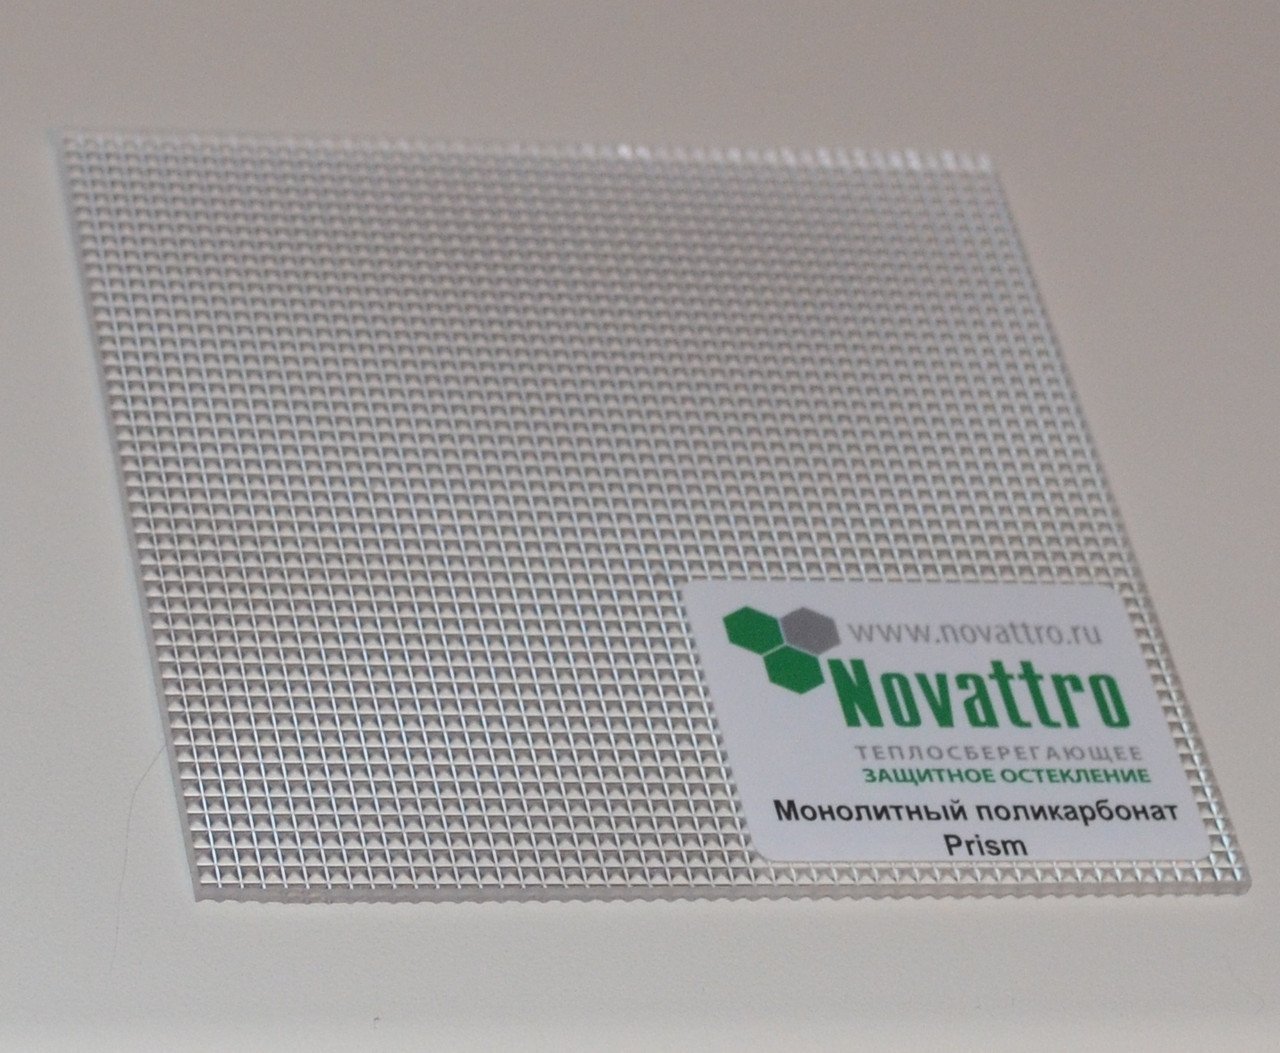 Поликарбонат монолитный 3 мм. 2мм прозрачный монолитный поликарбонат 2,05х3,05м Novattro UV 2. Поликарбонат монолитный прозрачный 3 (2,05*3,05м). Поликарбонат монолитный 2мм 2.05х3.05 прозрачный. Монолитный поликарбонат 1мм Novattro.